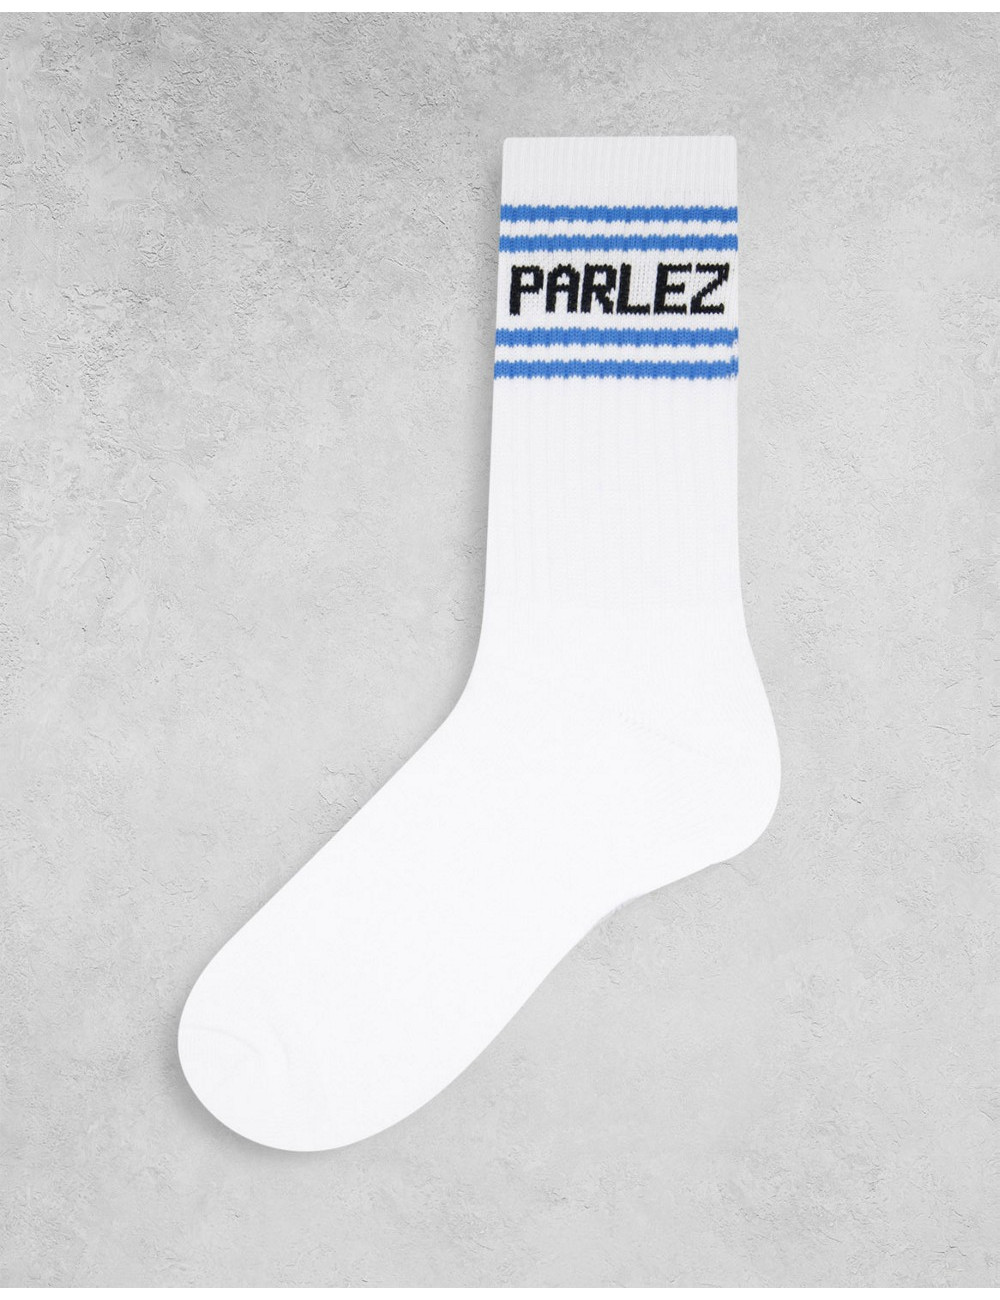 Parlez rode socks with blue...